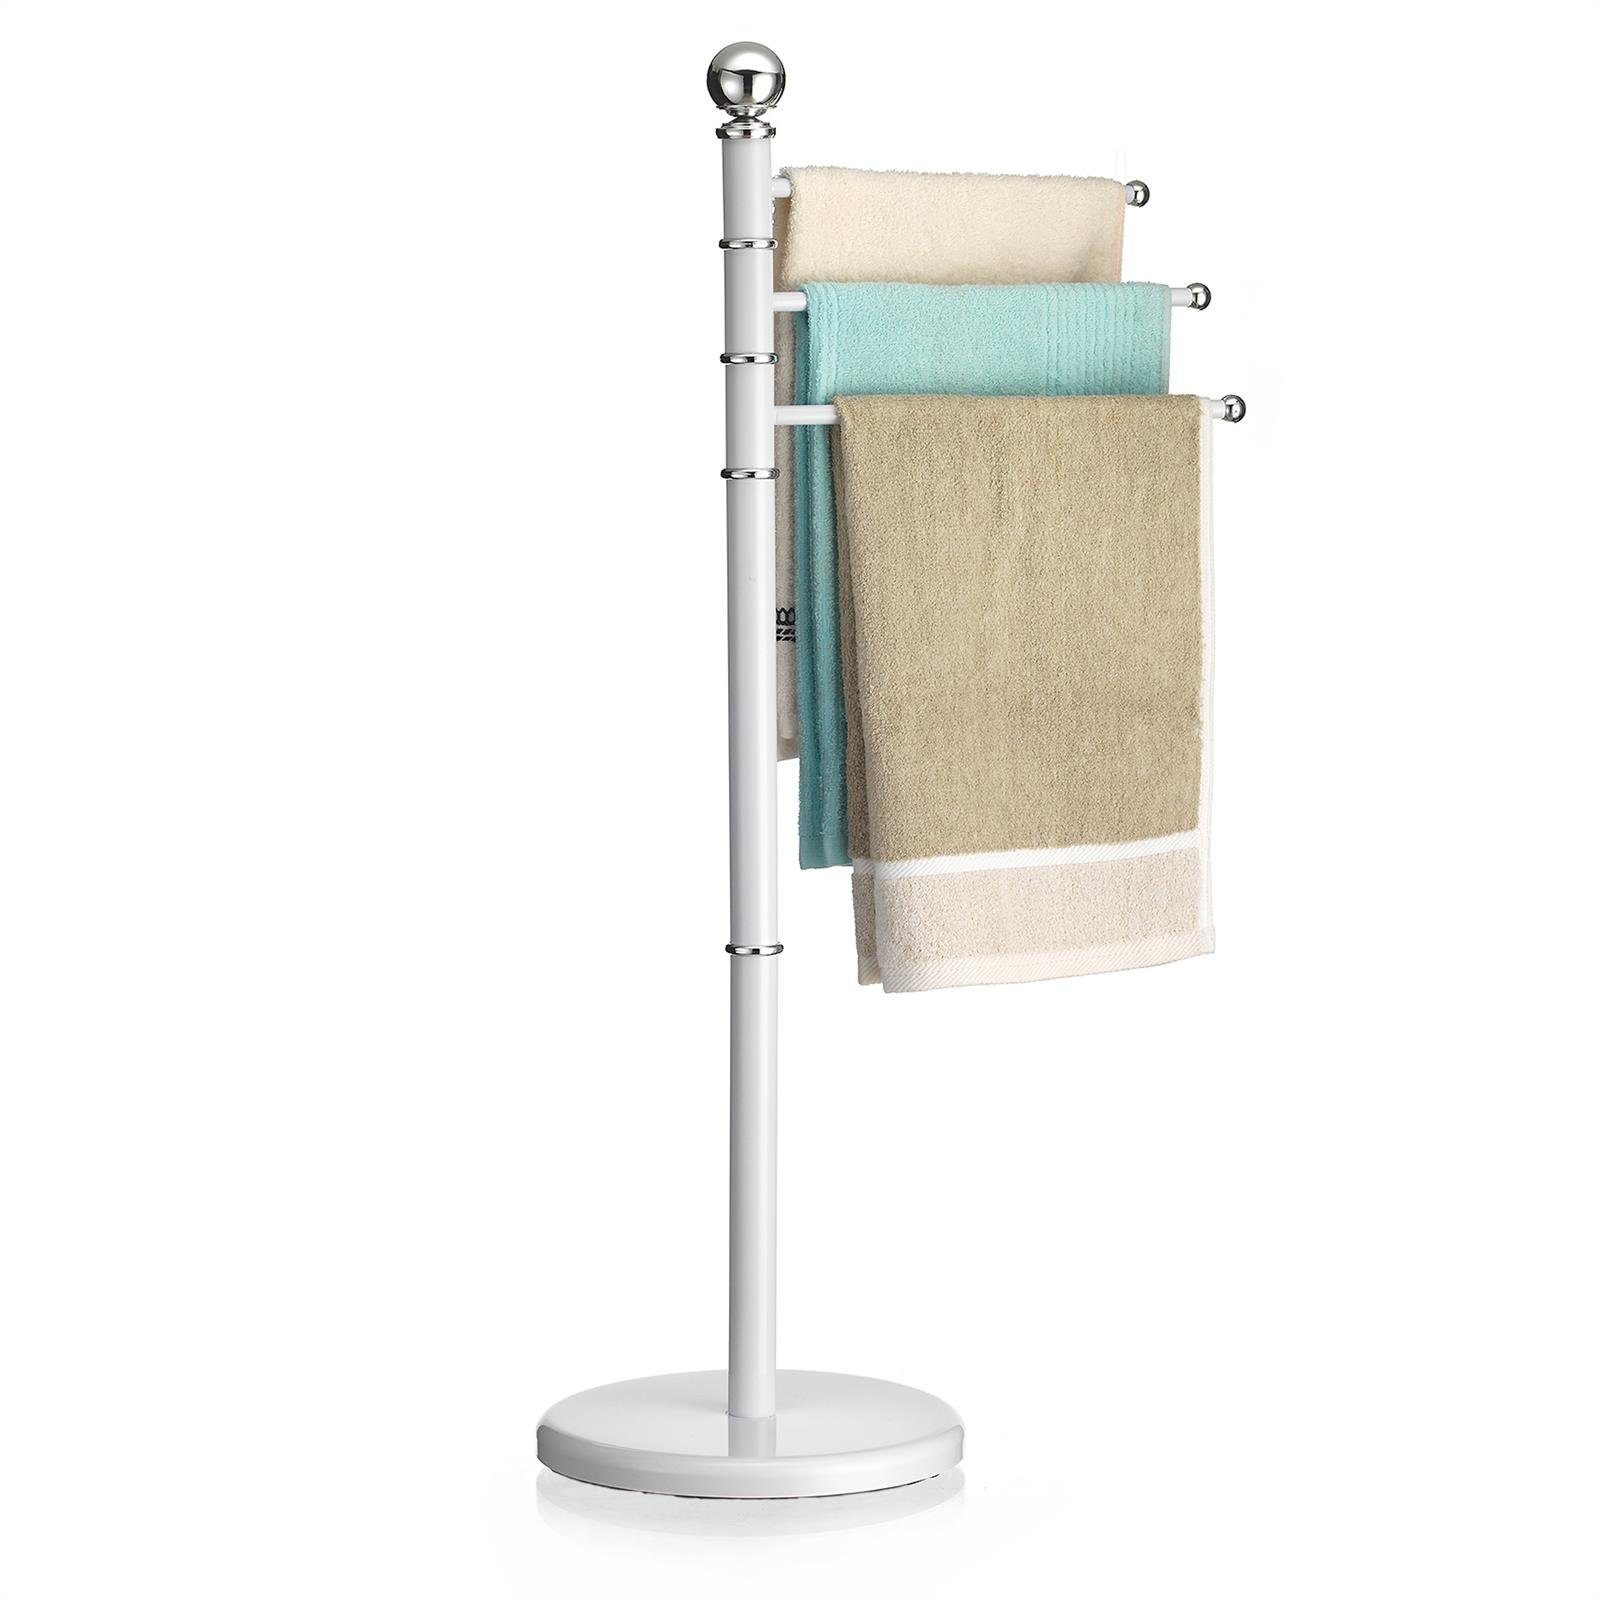 CARO-Möbel Handtuchständer PETRA, Handtuchhalter 3 Stangen Ständer Stand Badetuchhalter Badetuchstange w